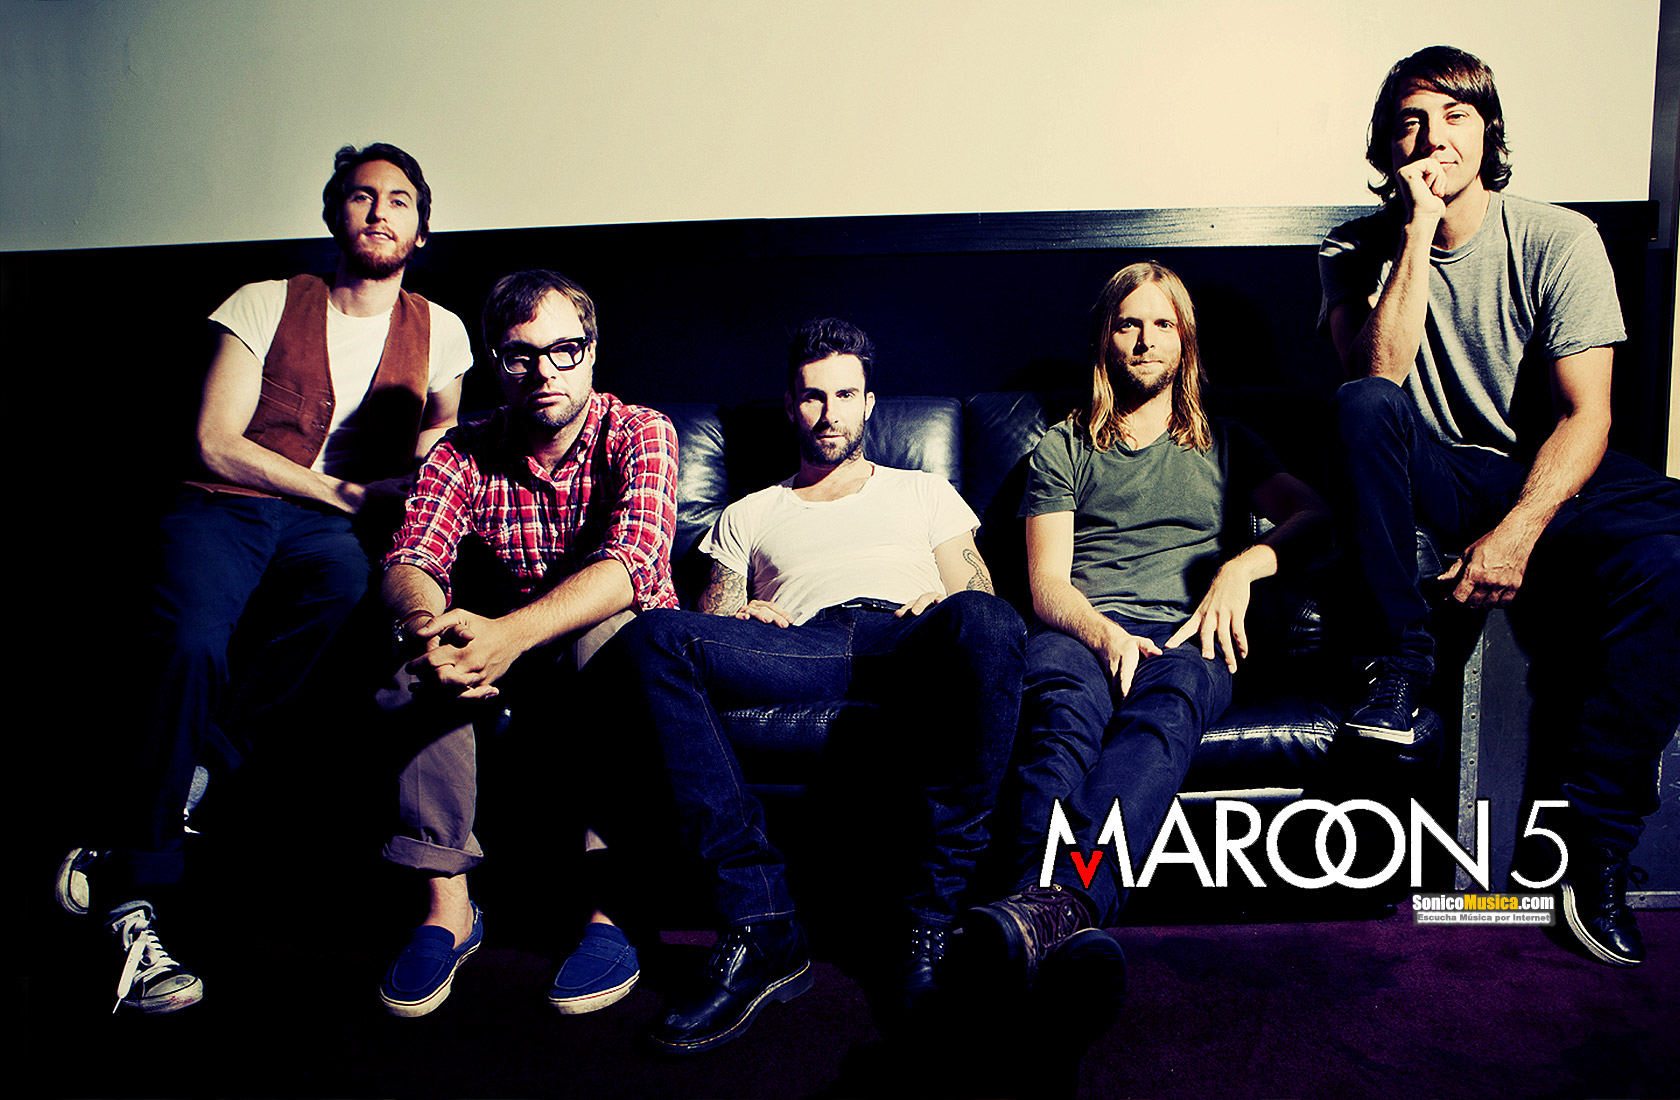 Maroon 5 lança novo single "Memories" - Curitiba Cult | Curitiba Cult - Agenda cultural de Curitiba